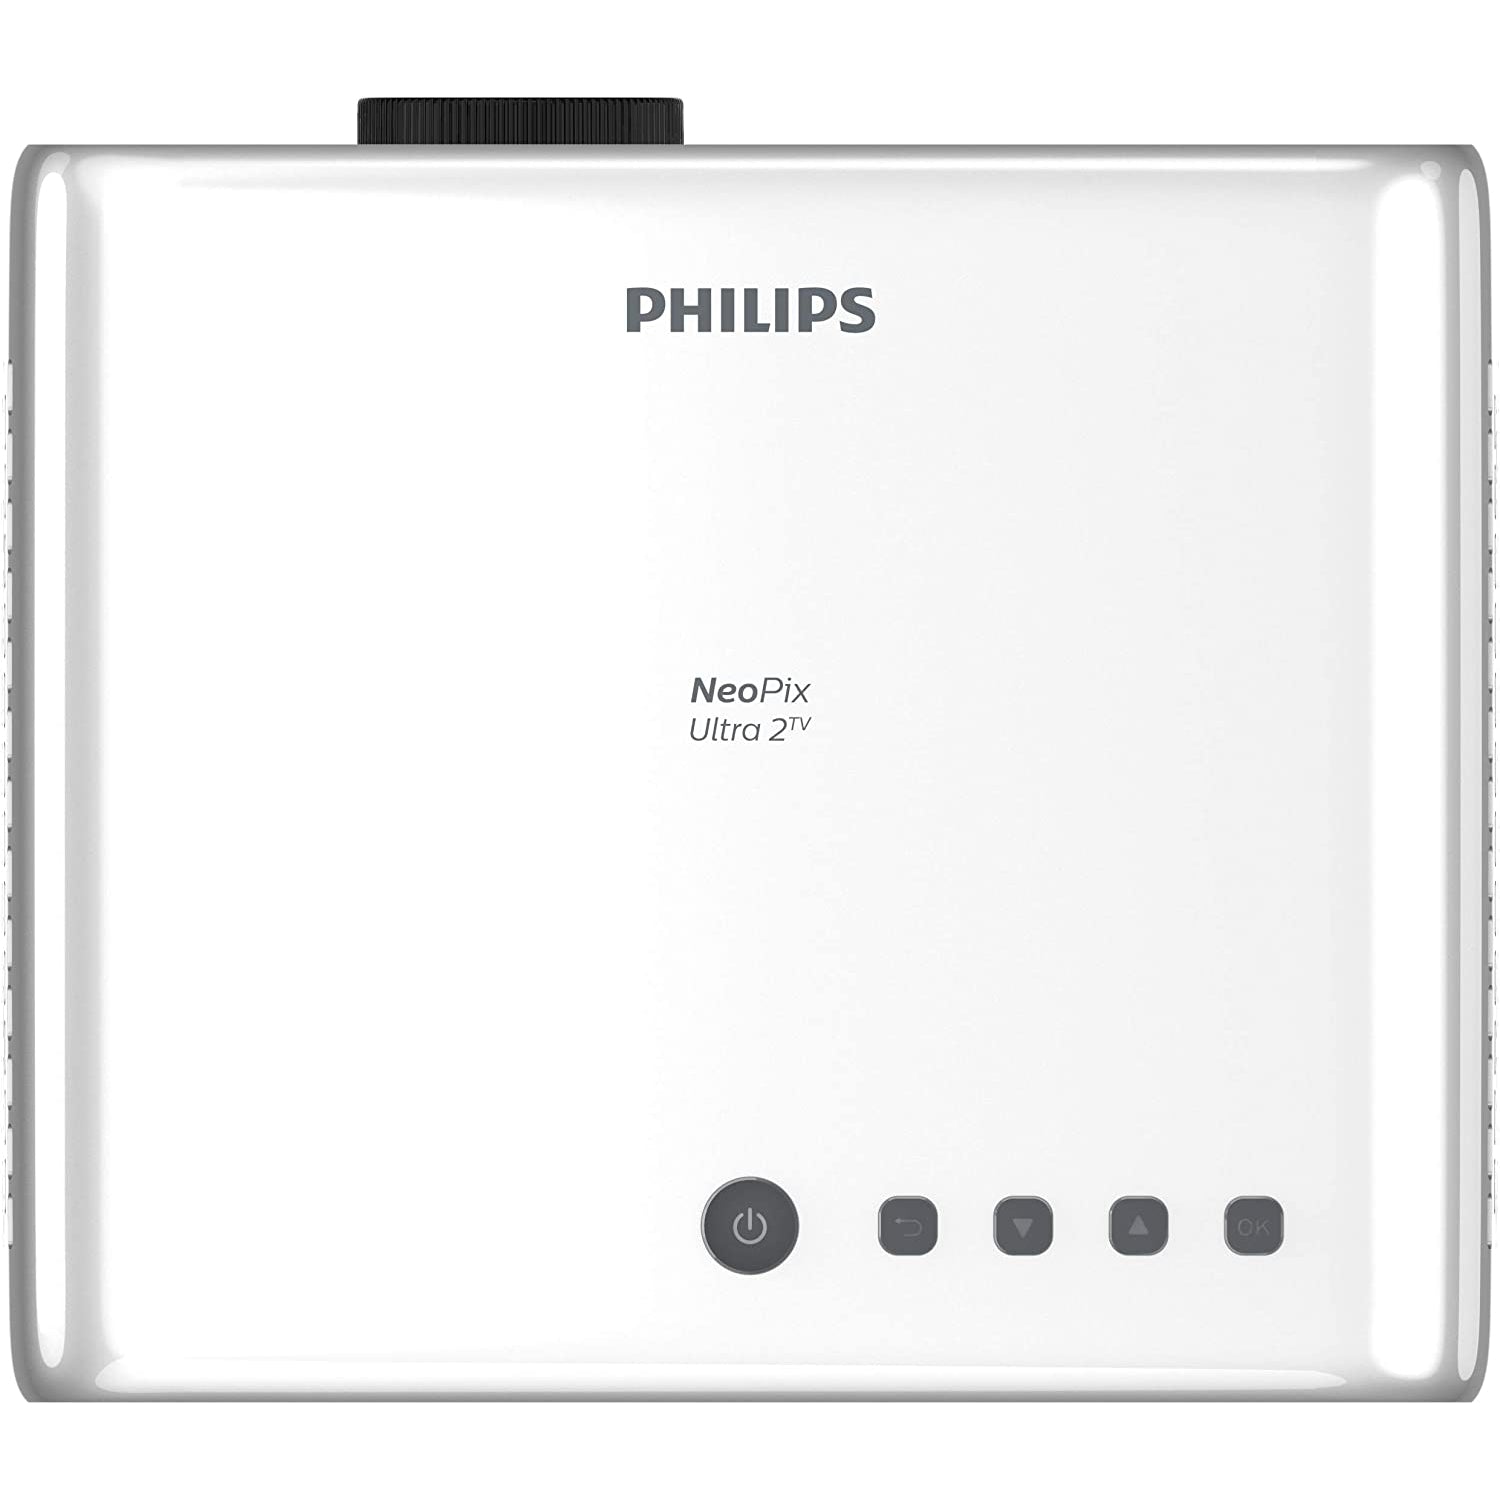 Philips NeoPix Ultra 2TV NPX643 Smart Full HD Home Cinema Projector - Refurbished Excellent